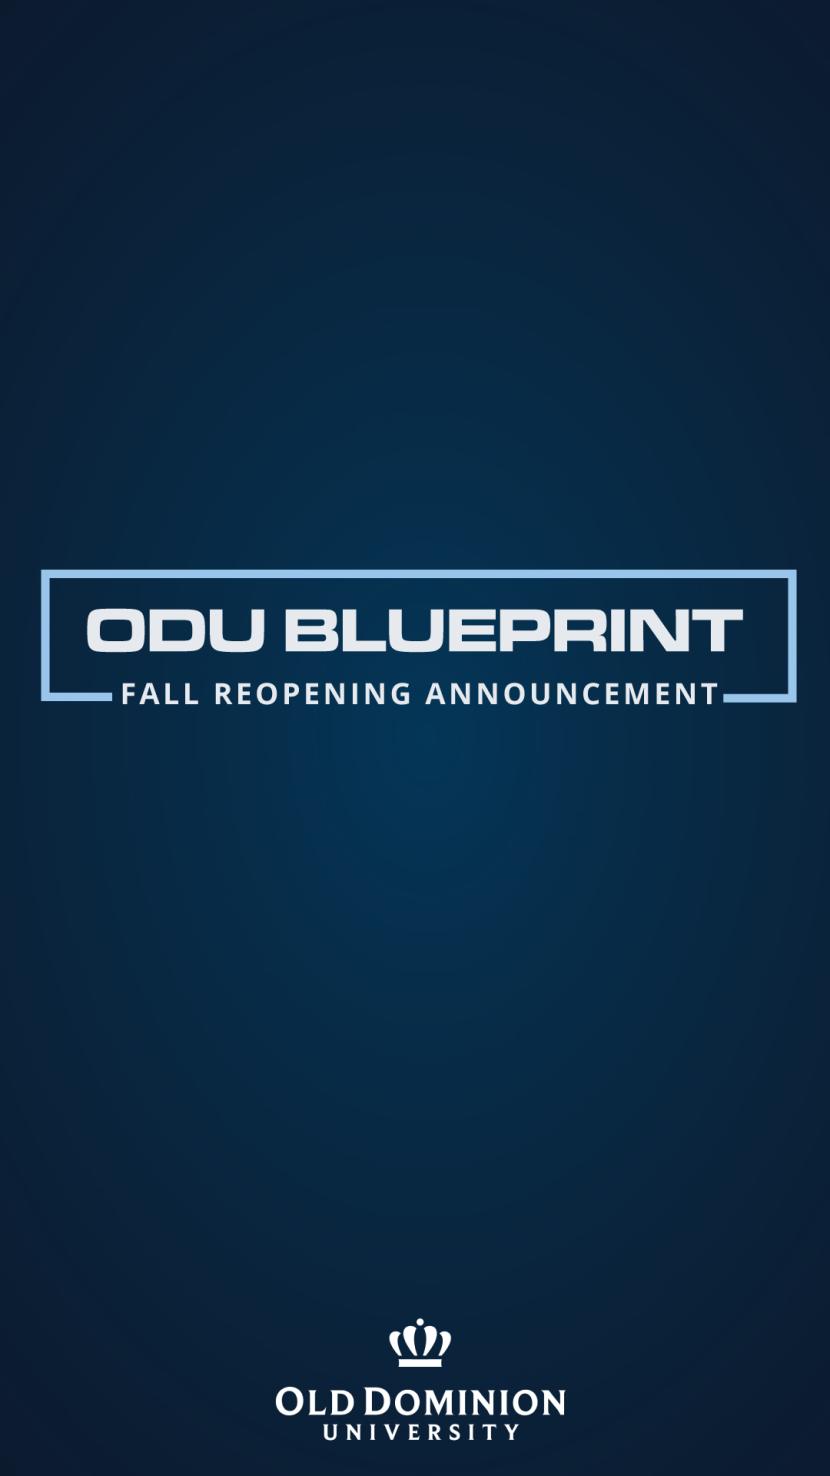 odu-blueprint-fall-reopening-instagram